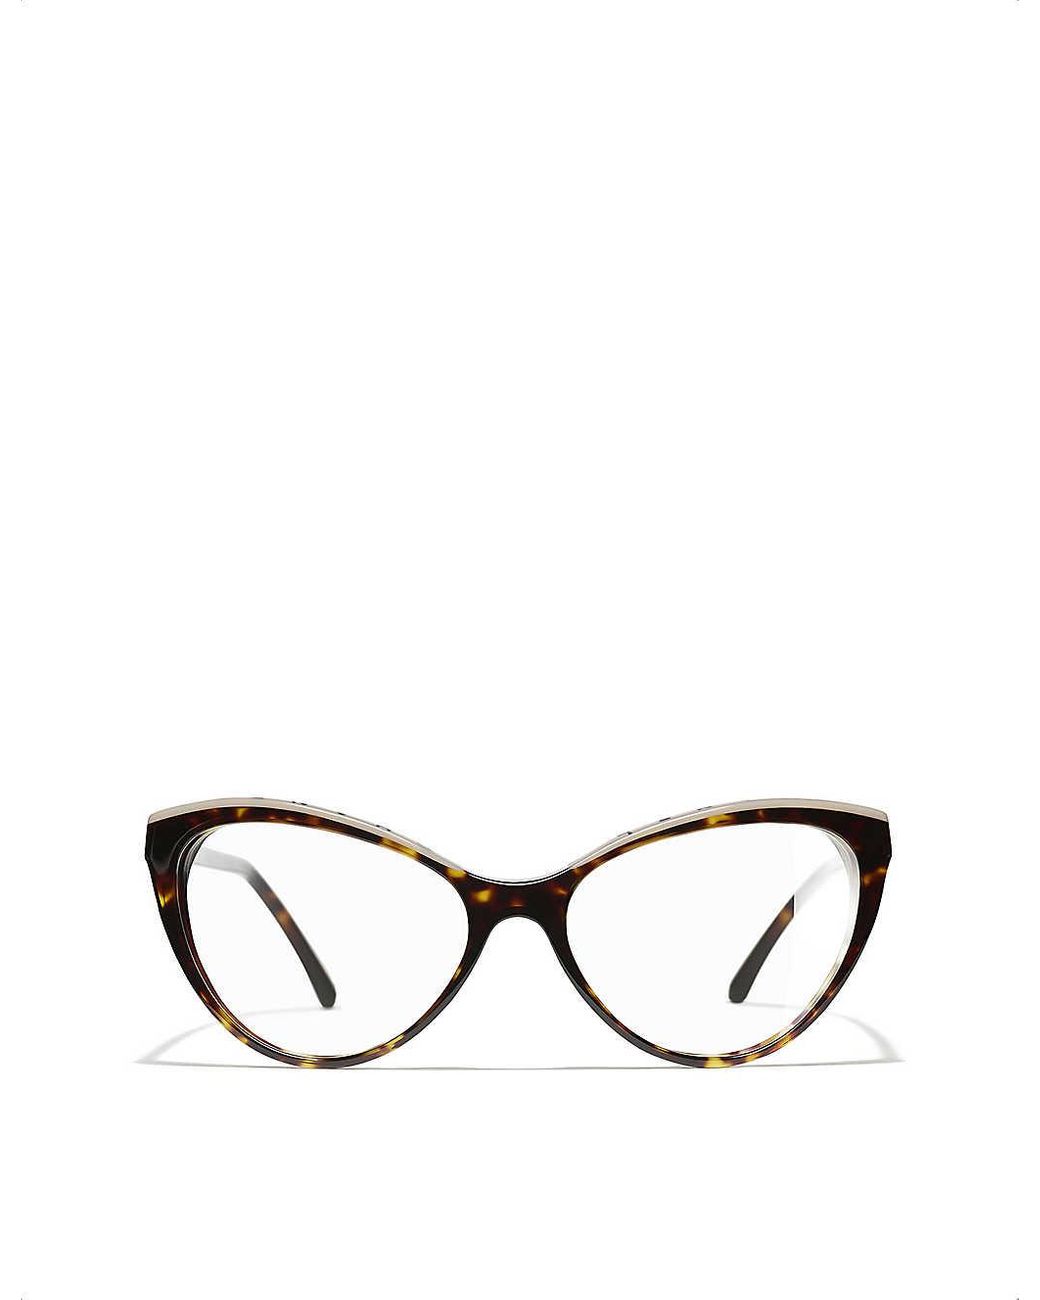 Chanel Square Sunglasses - Acetate, Brown - Polarized - UV Protected - Women's Sunglasses - 5478 1704/3